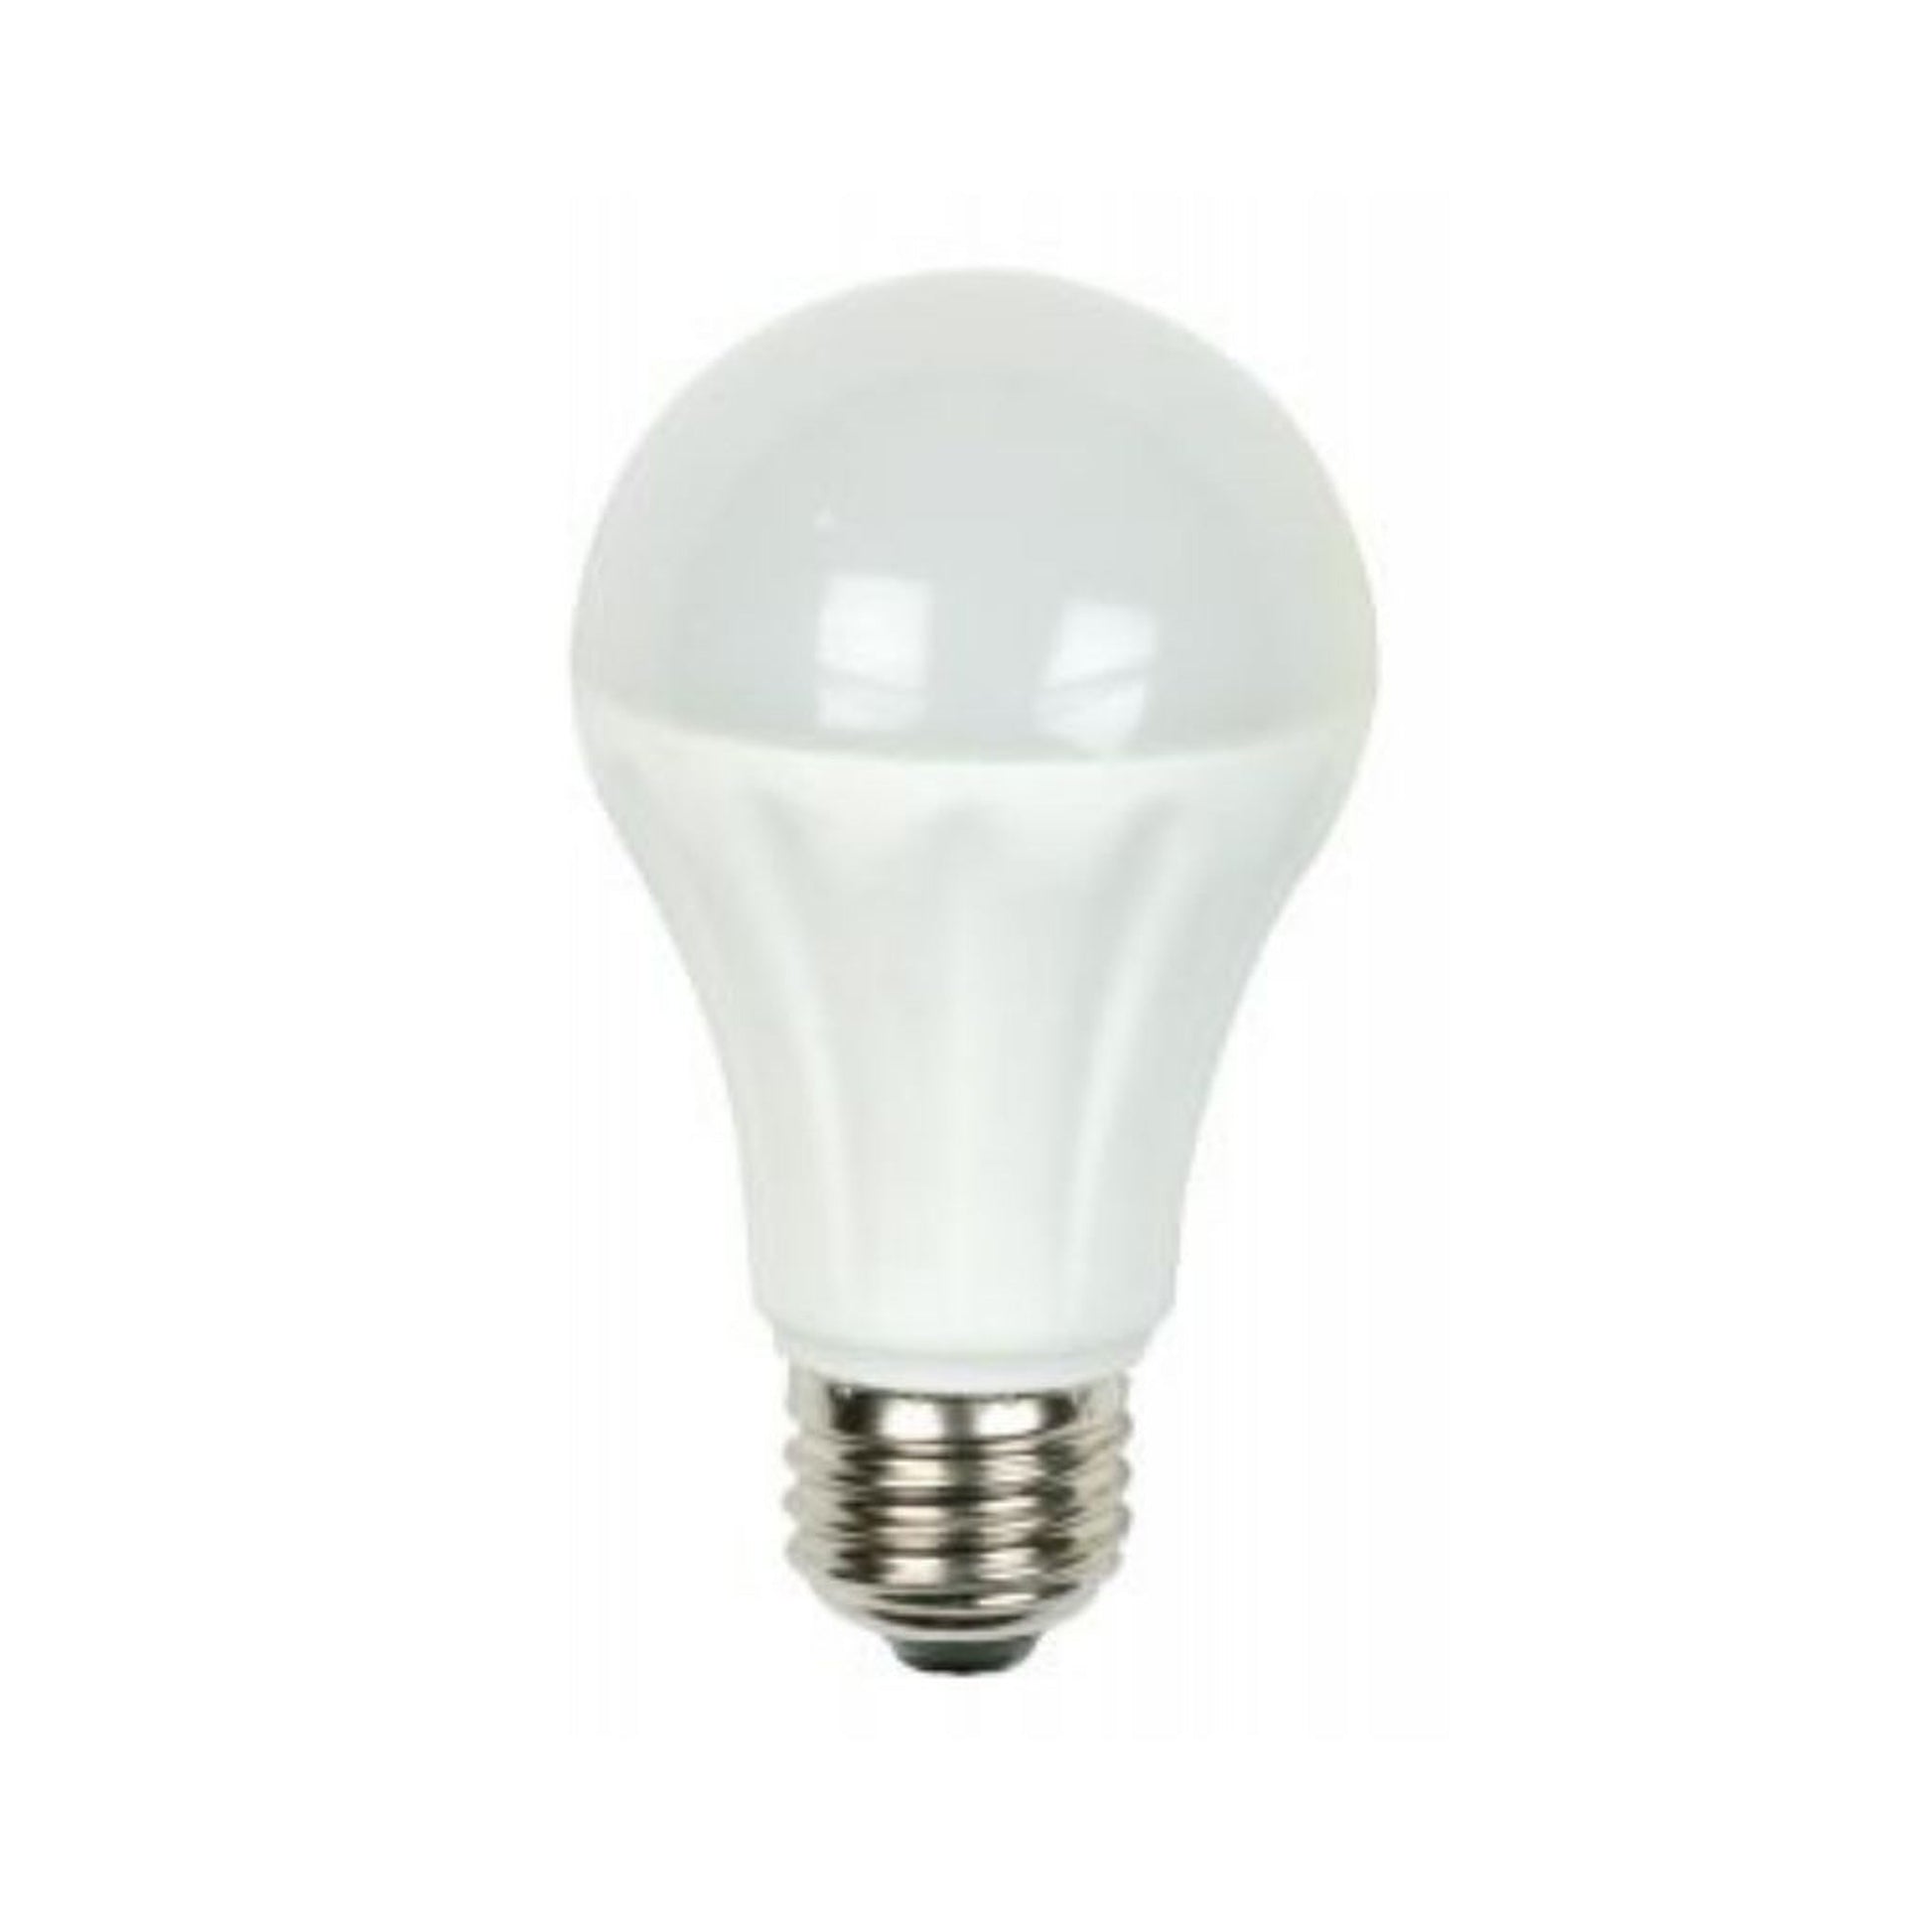 Craftmade 7-Watt A19 Frosted Finish, E26 Medium Base, 4.3" M.O.L., 2700K Warm White LED Light Bulb